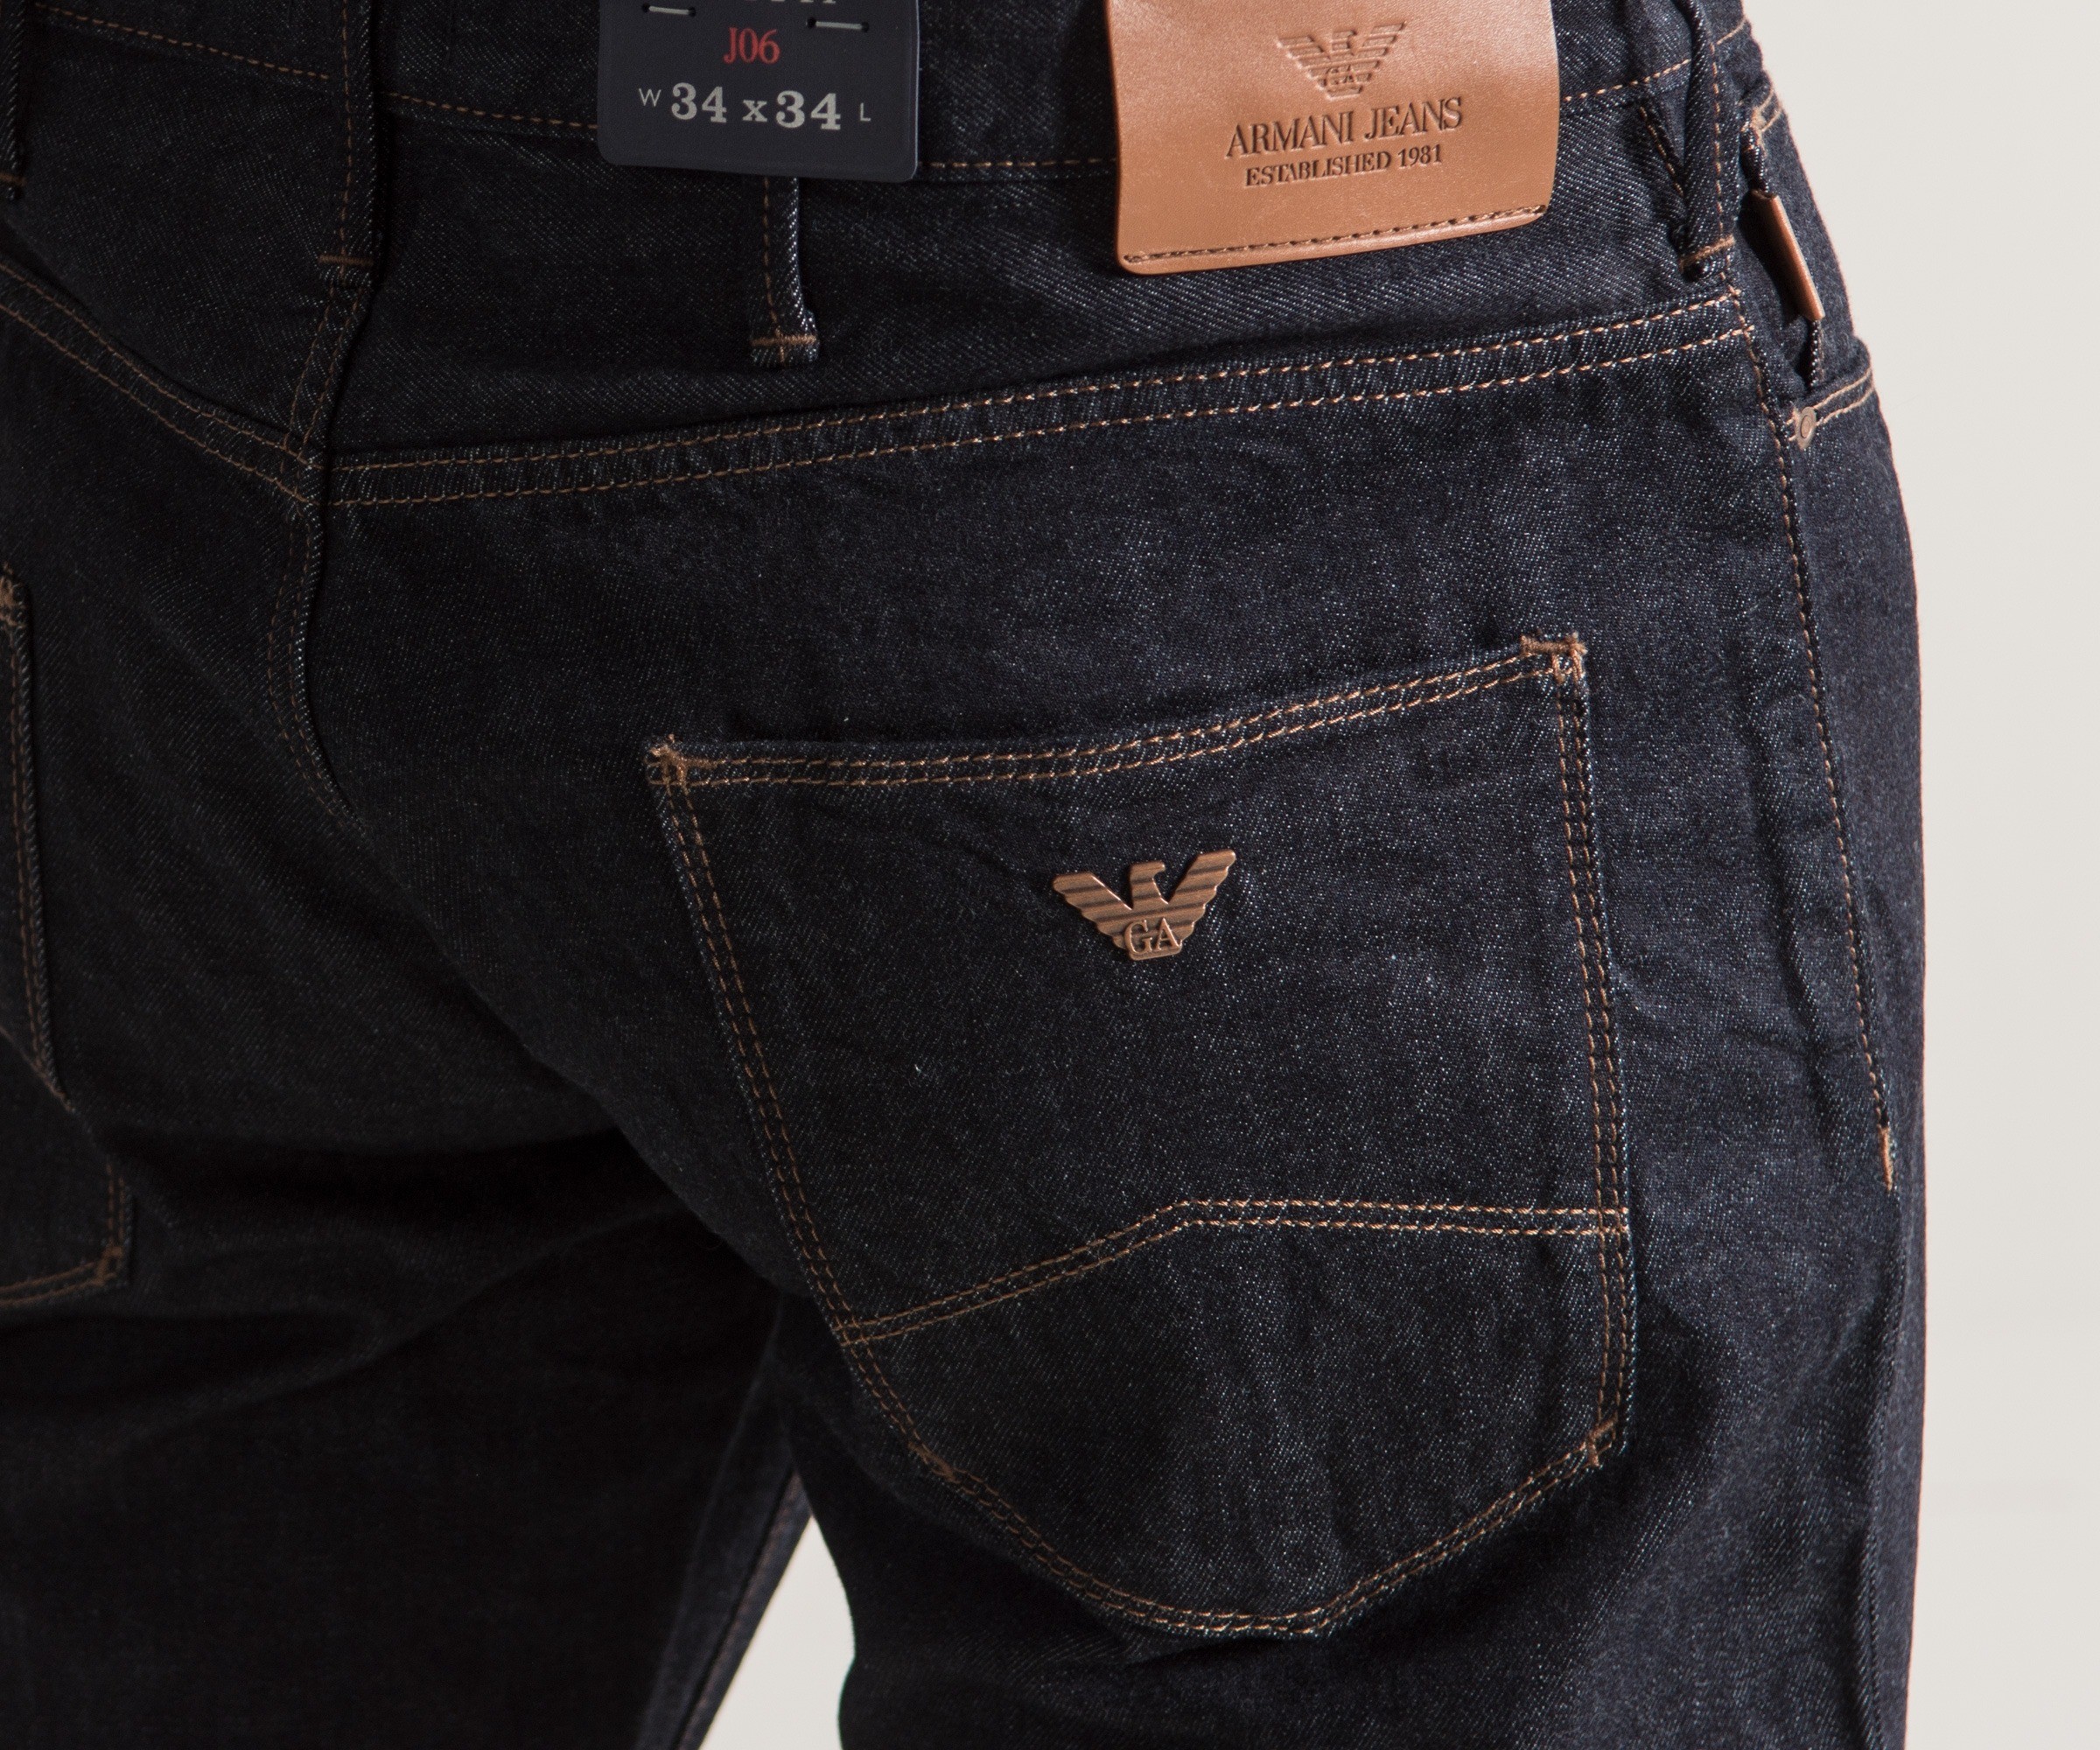 Emporio Armani 'J06' Slim Fit Jeans Raw Denim